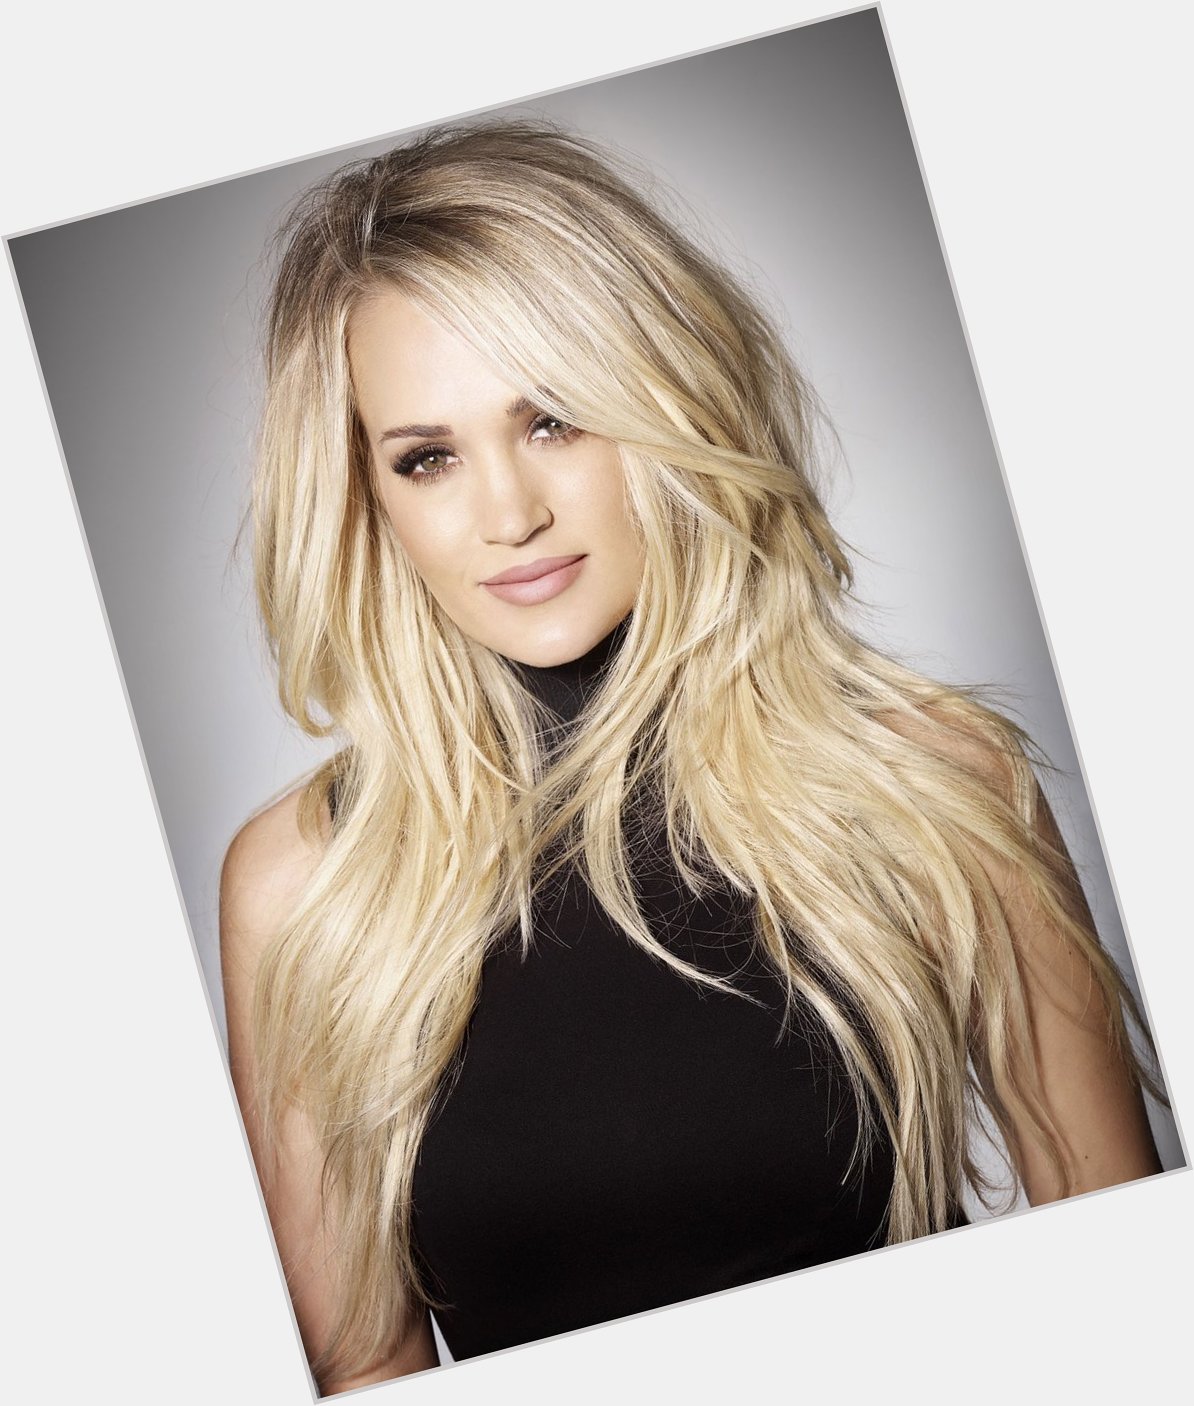 Happy Birthday to my celebrity crush Carrie Underwood! 